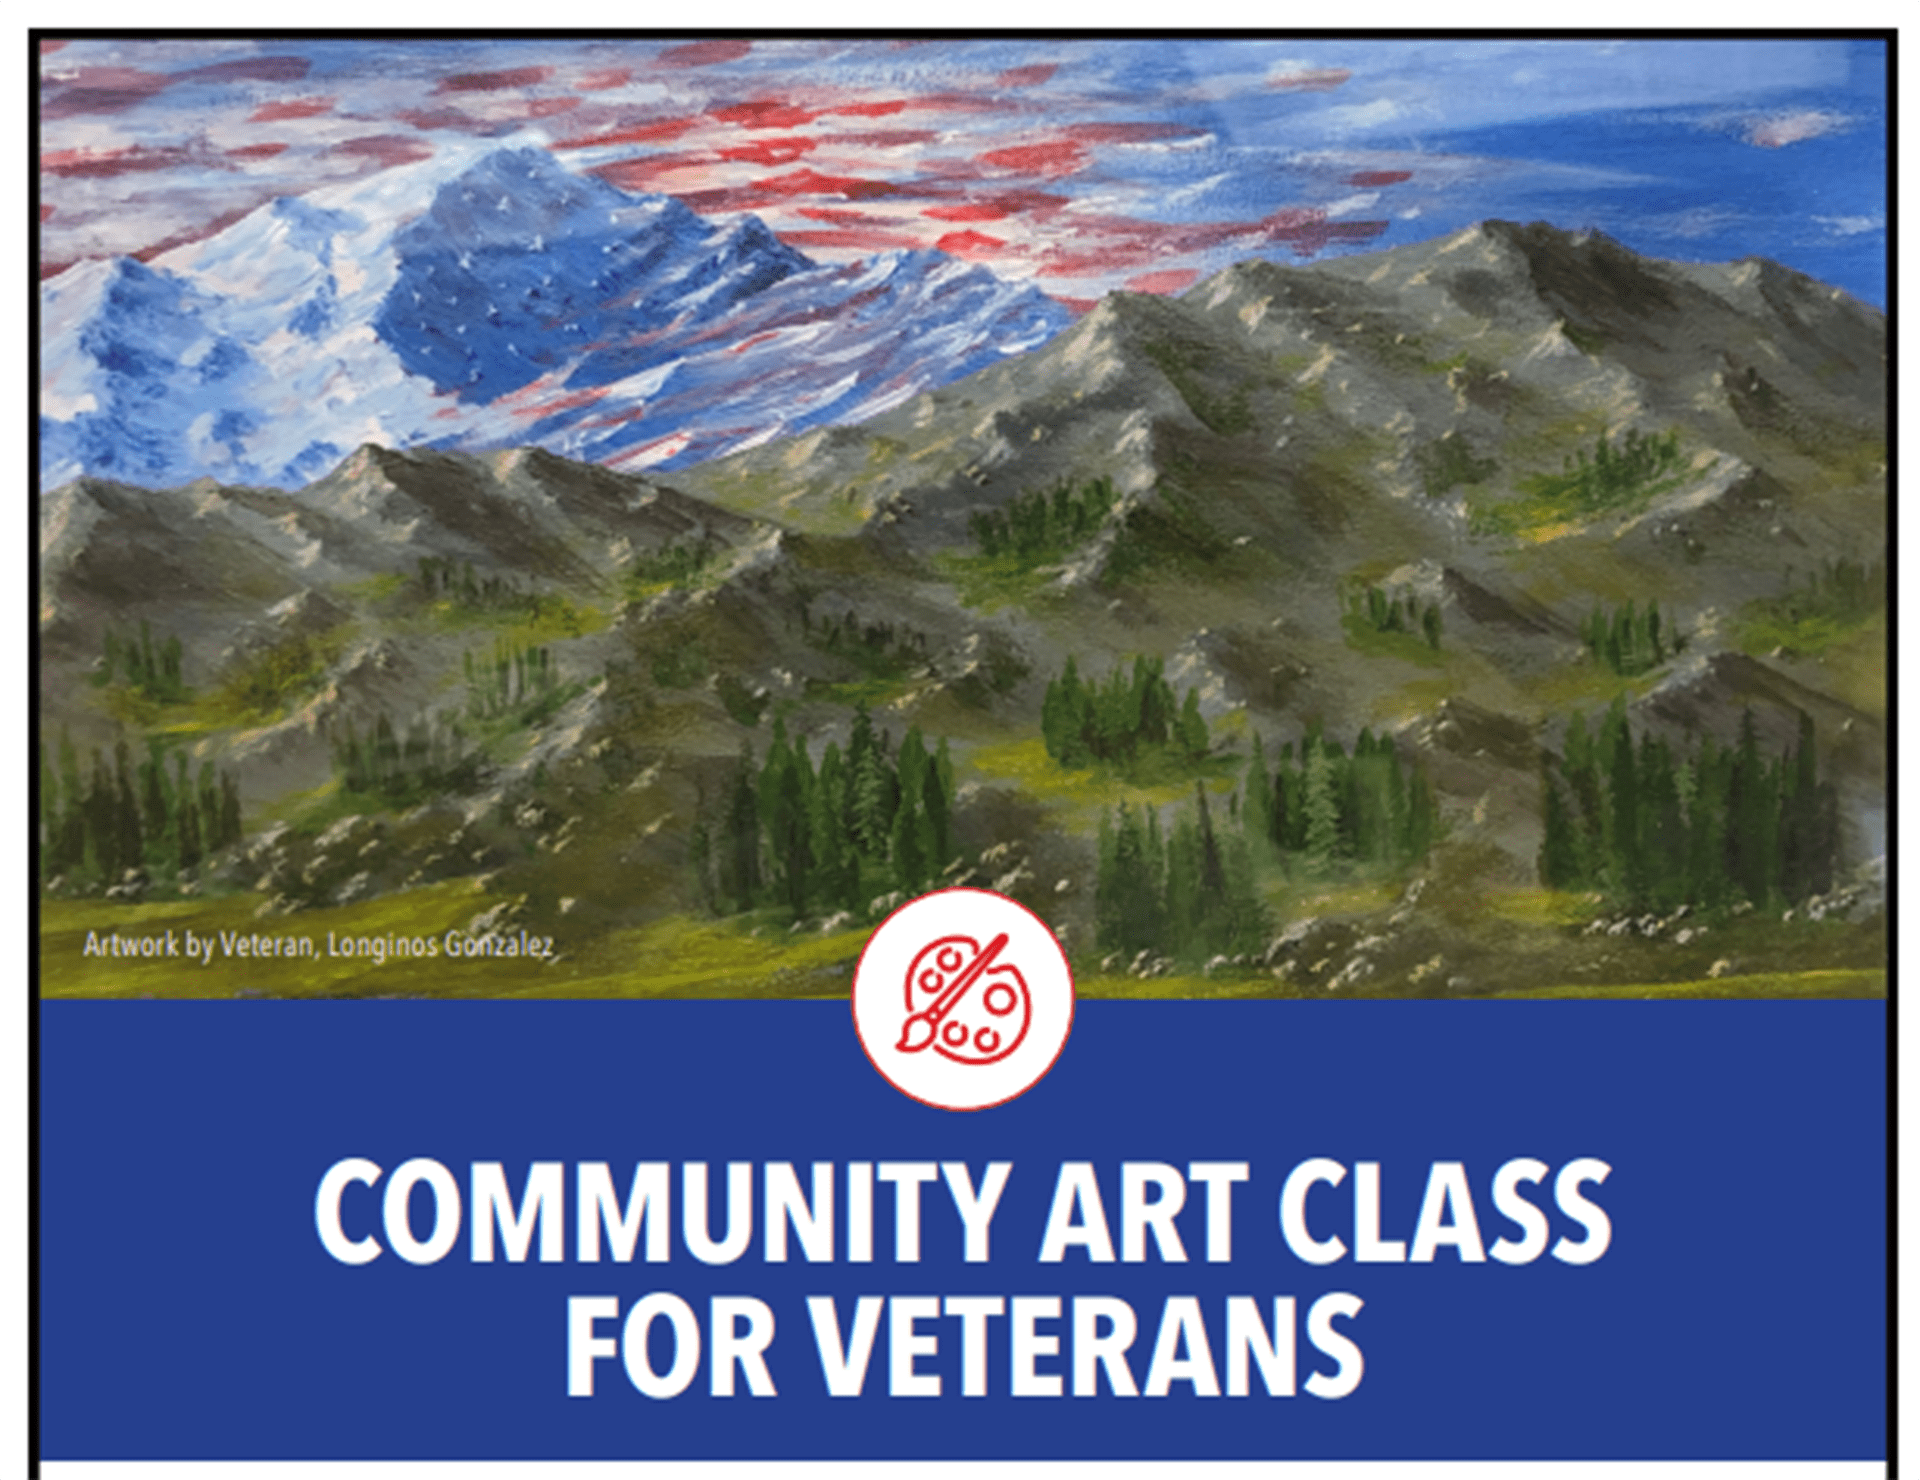 Community Art Class for Veterans graphic